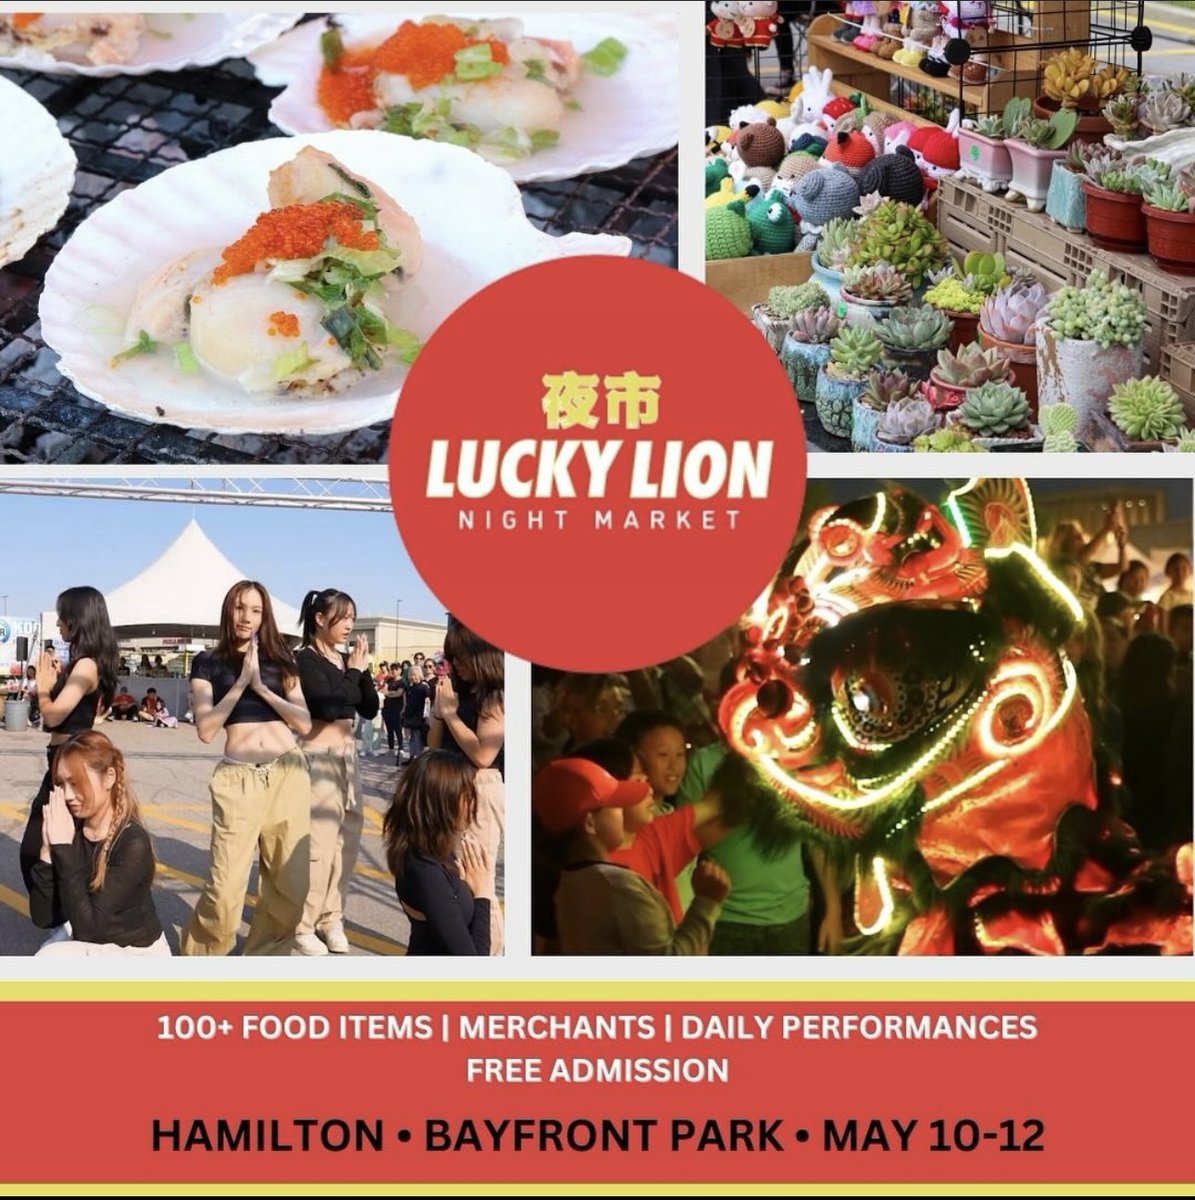 Friday's Street Food Locations: tinyurl.com/thu94x93 #FoodTruckEats #Toronto #Mississauga #Brampton #Vaughan #Milton #BurlON #HamOnt #Niagara #WRAwesome #LdnOnt #Collingwood #Durham #Ottawa 
#LuckyLionNightMarket #BayfrontParkHamilton